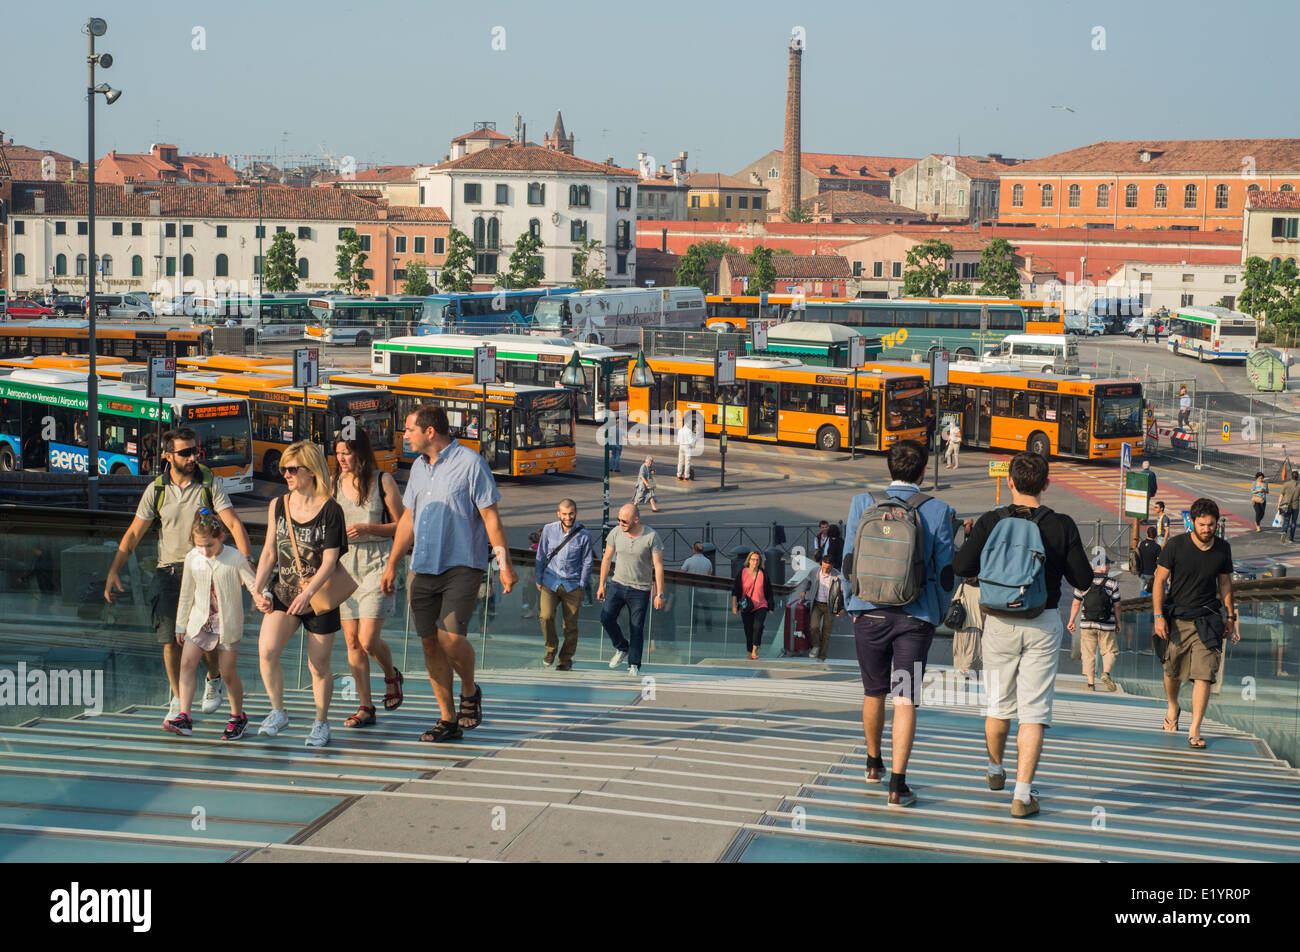 Tourists on Ponte della Costituzione aka Calatrava Bridge overlooking the main bus station at Piazzale Roma in Venice, Italy Stock Photo